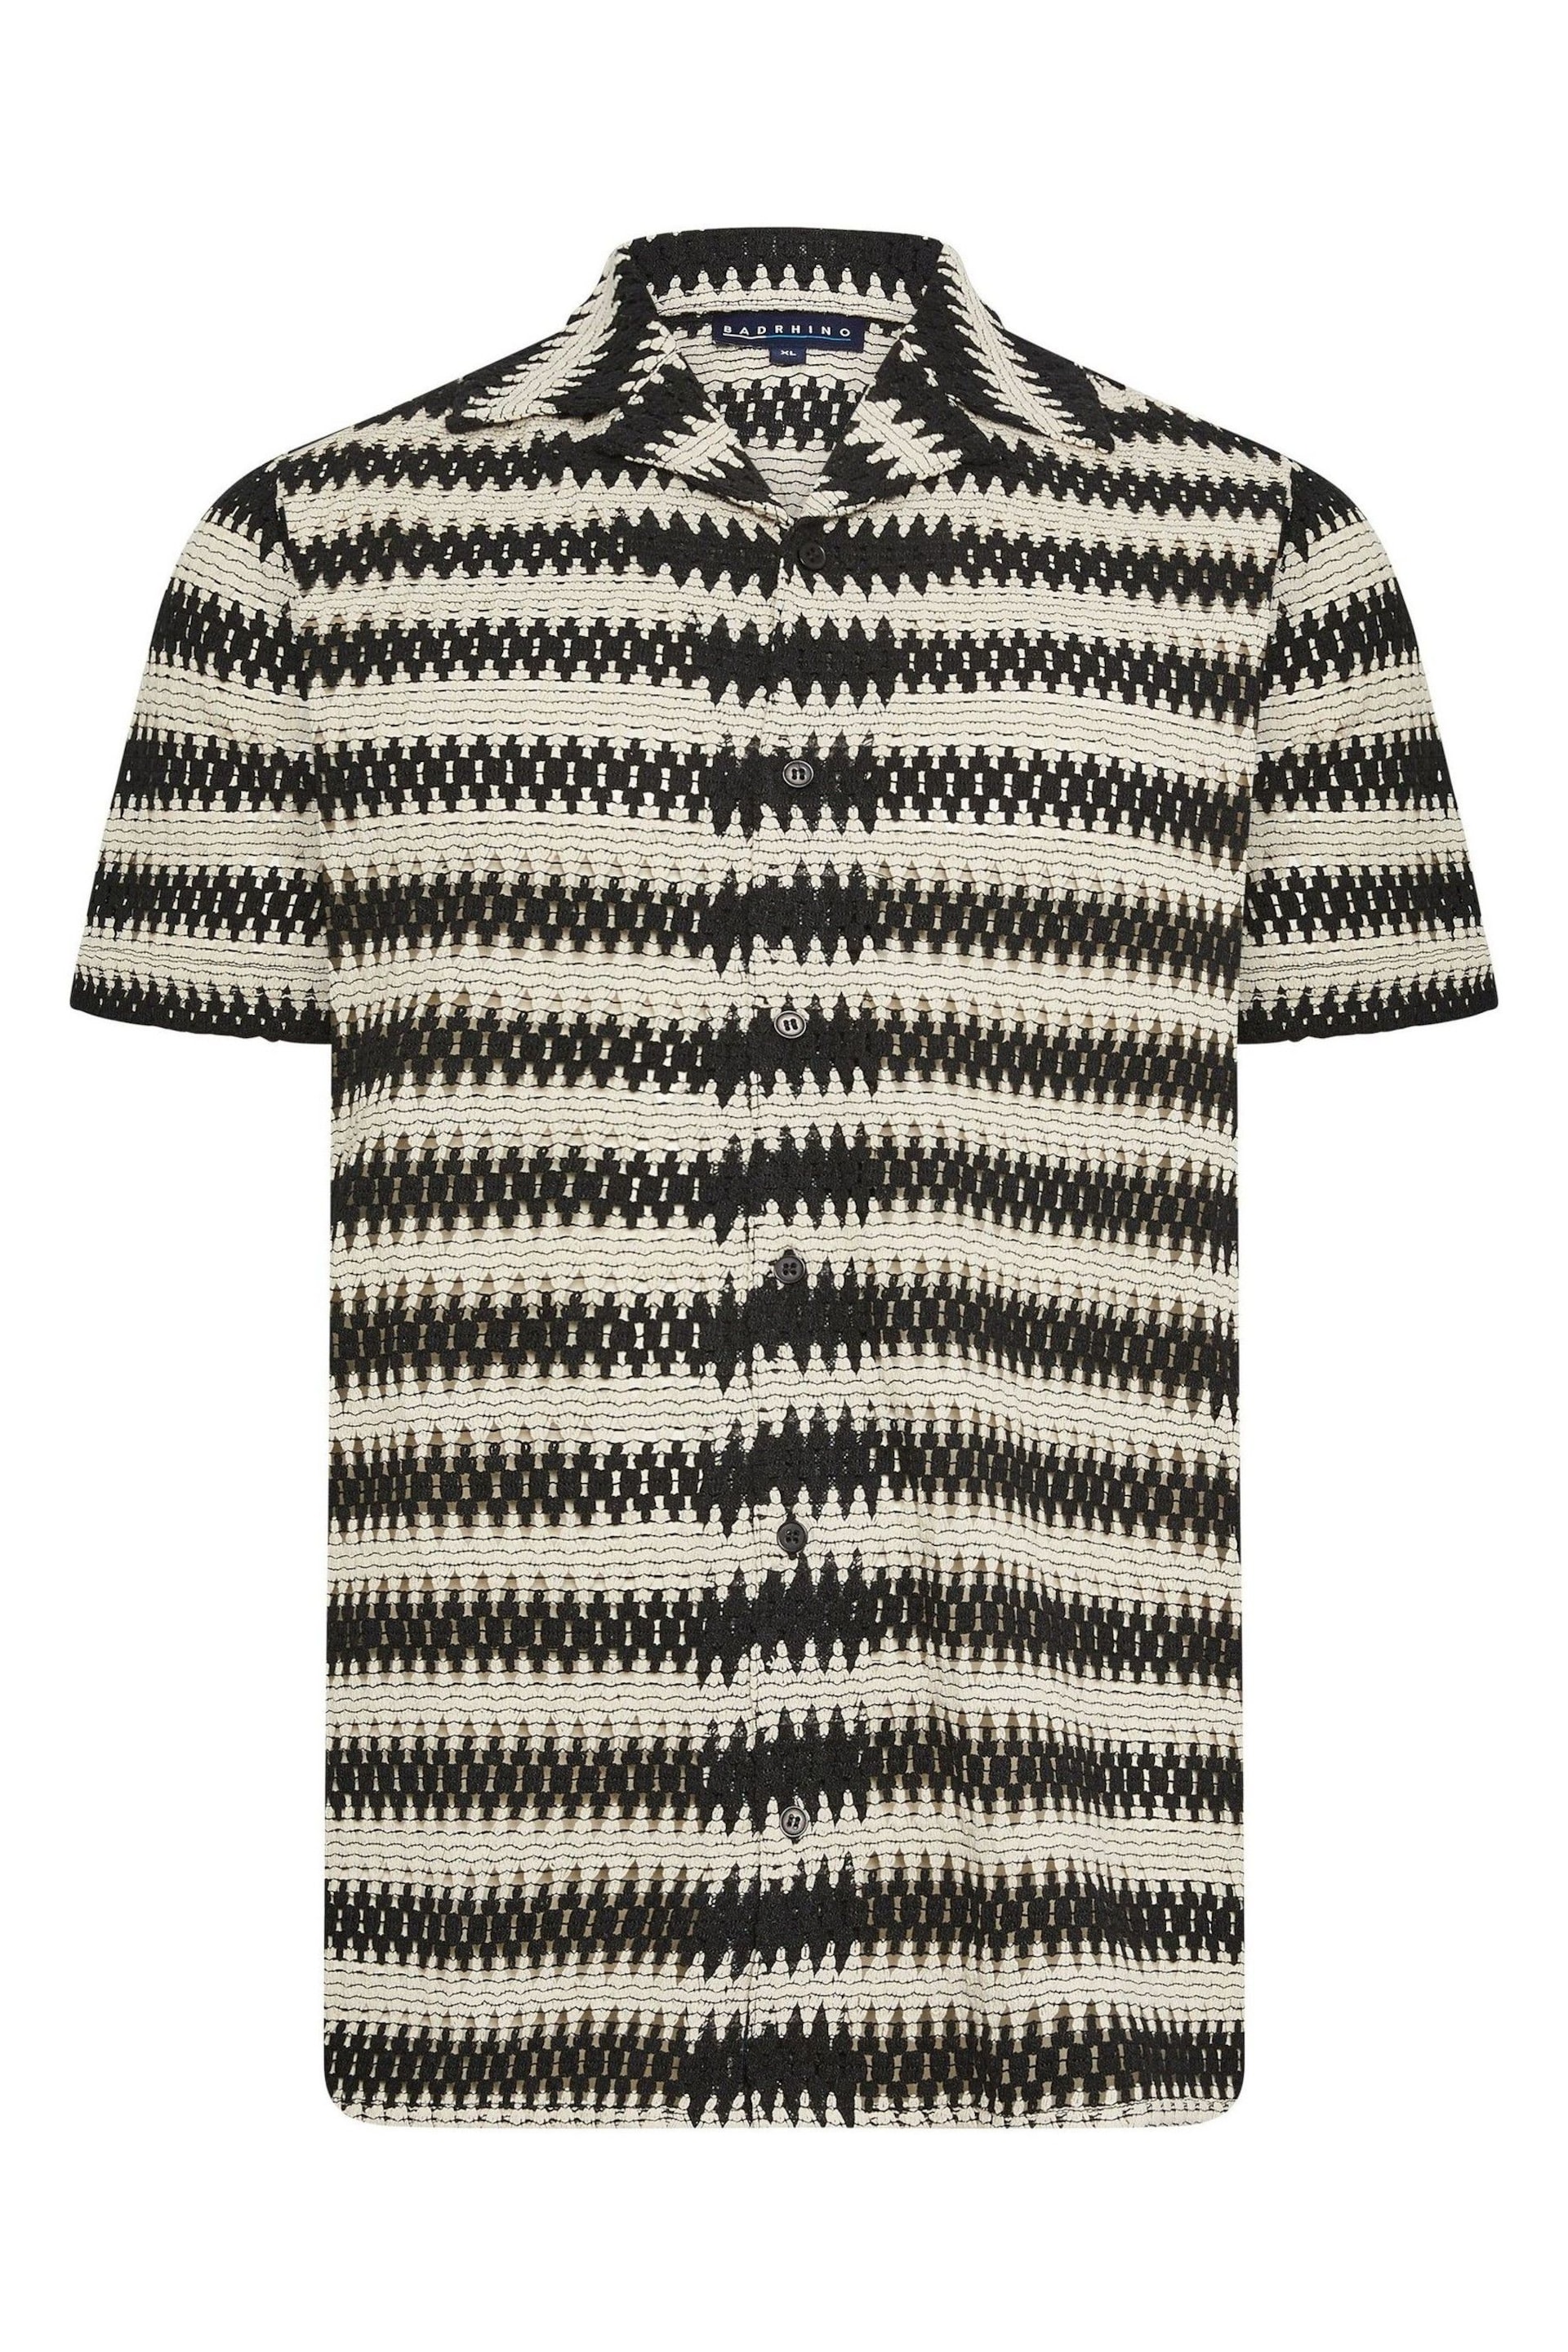 BadRhino Big & Tall Black Textured Crochet Short Sleeve Shirt - Image 3 of 4